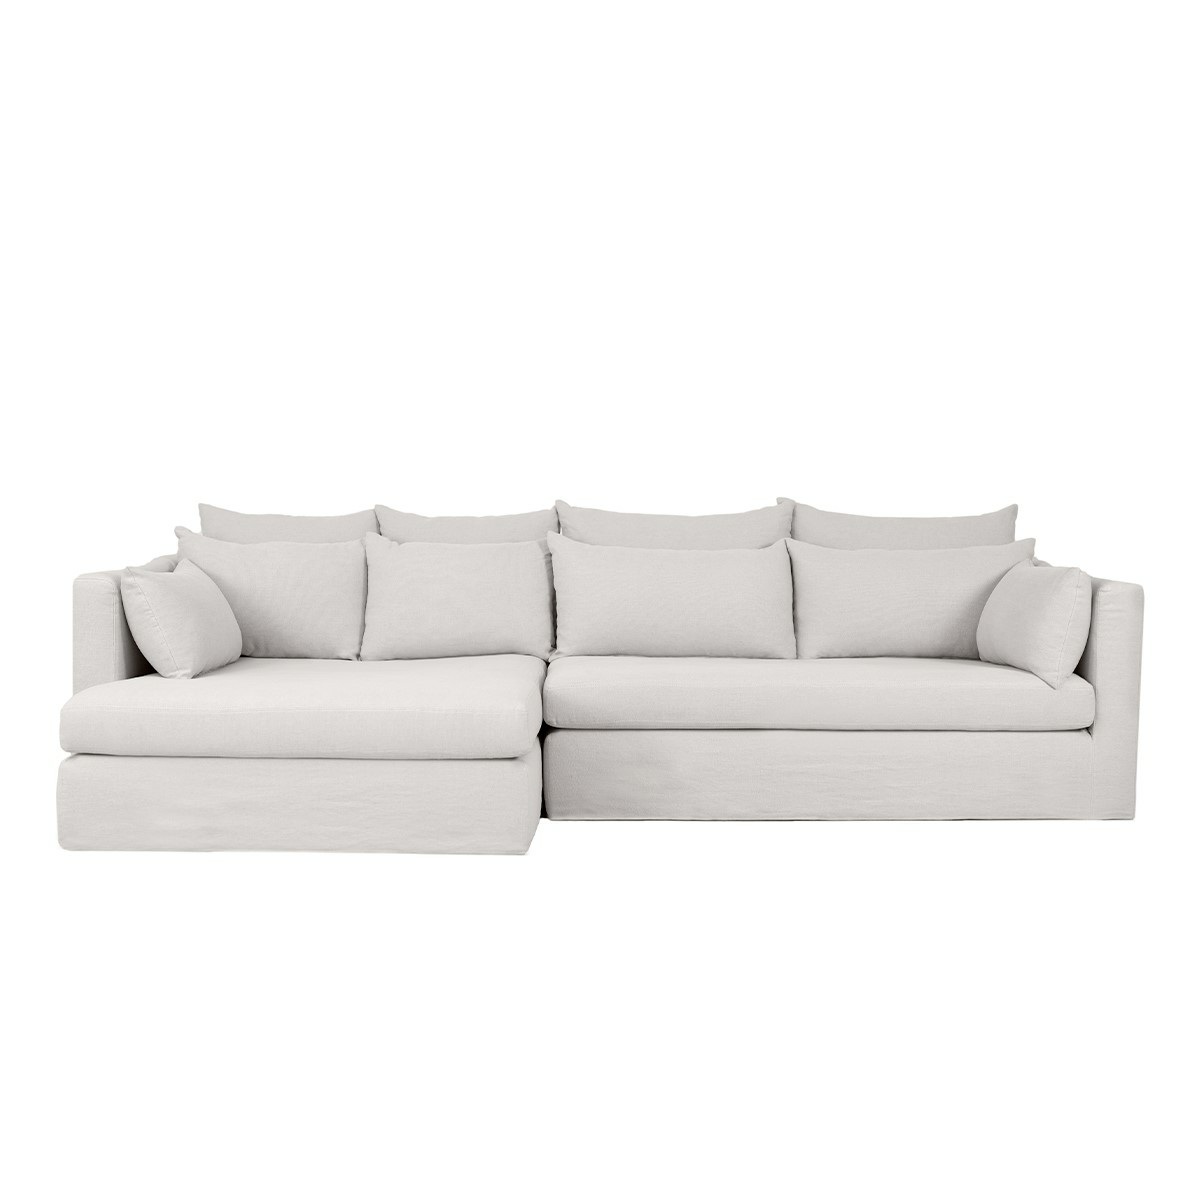 SuperBox corner sofa - Left angle, Various Sizes - Linen - image 1